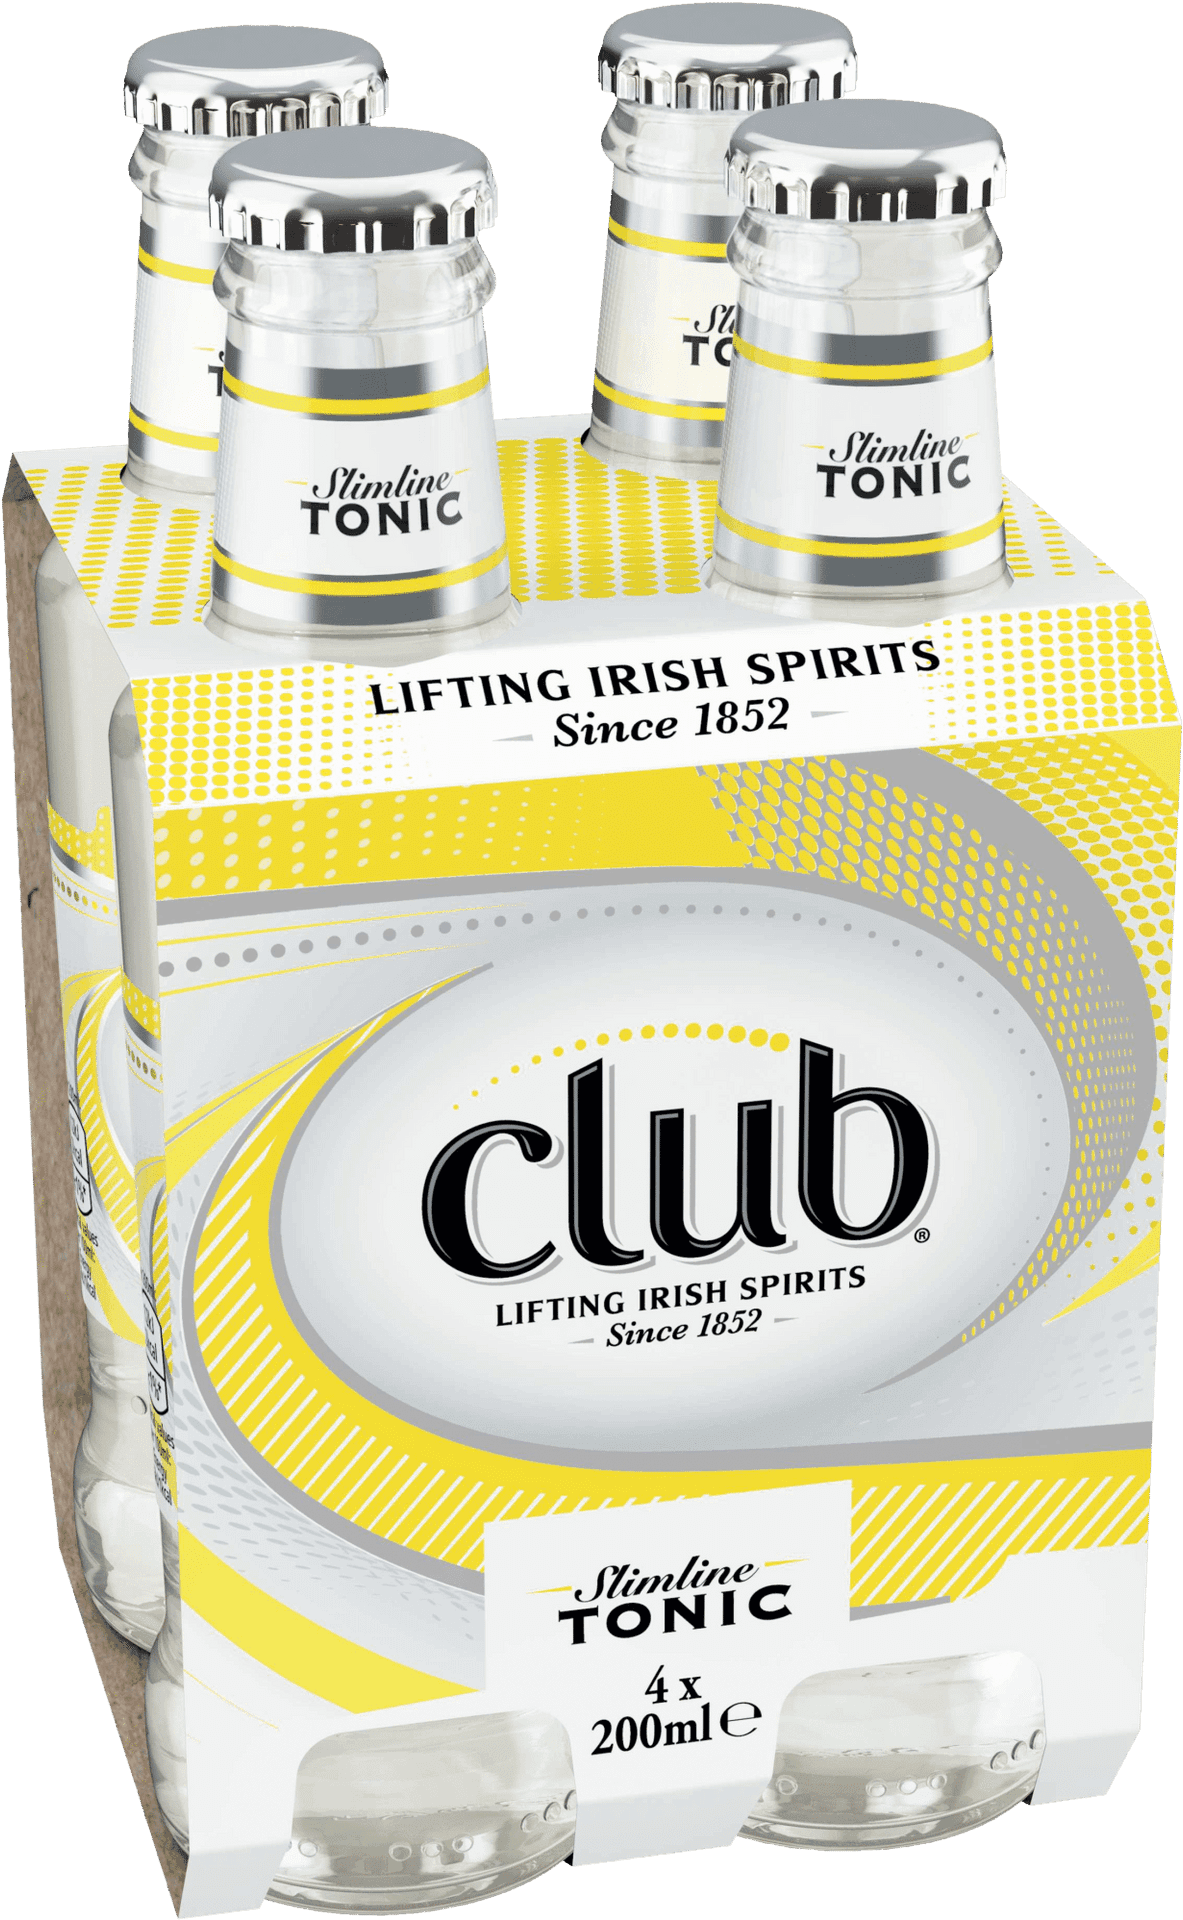 Club Slimline Tonic Pack Image PNG